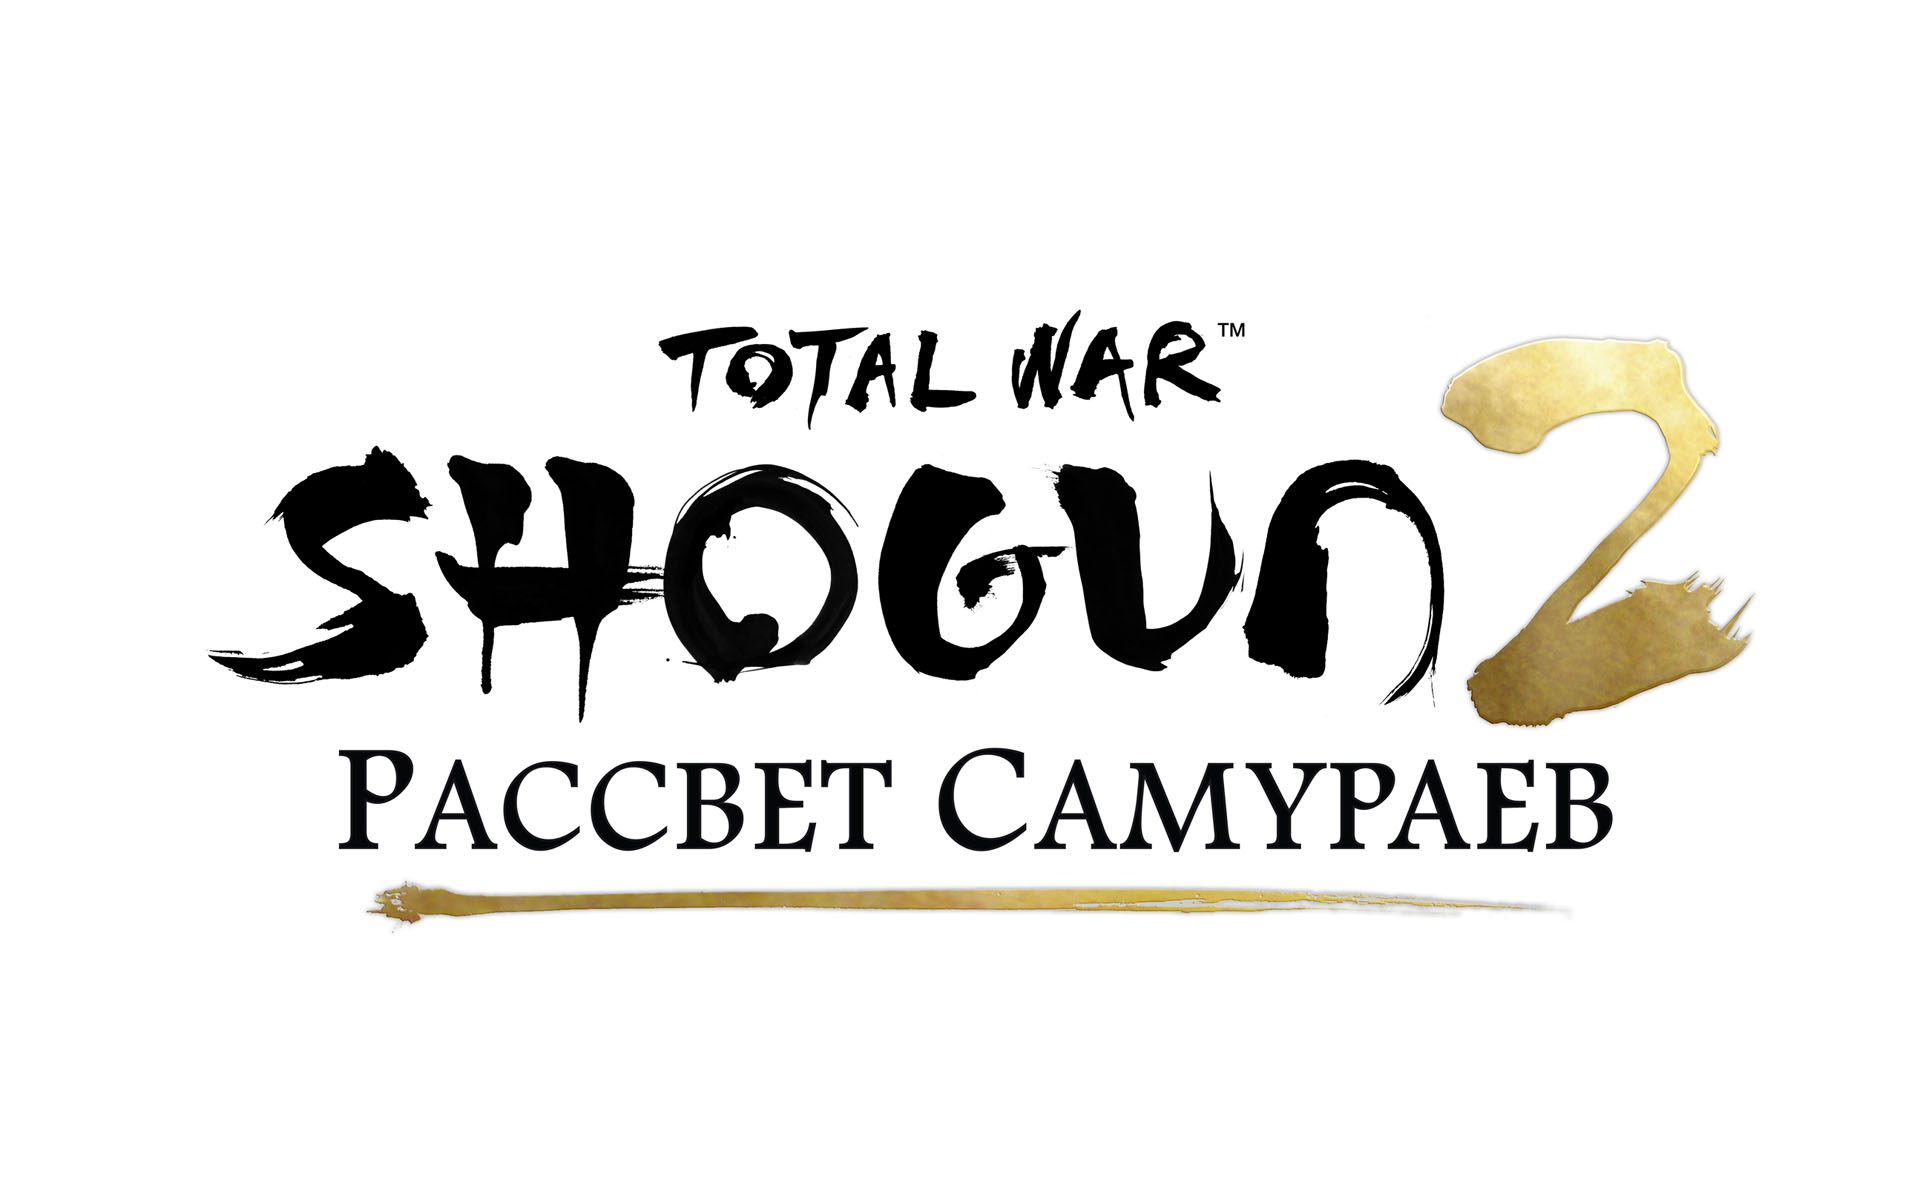 260303 Fondos de pantalla e Total War: Shogun 2 imágenes en el escritorio. Descarga protectores de pantalla  en tu PC gratis